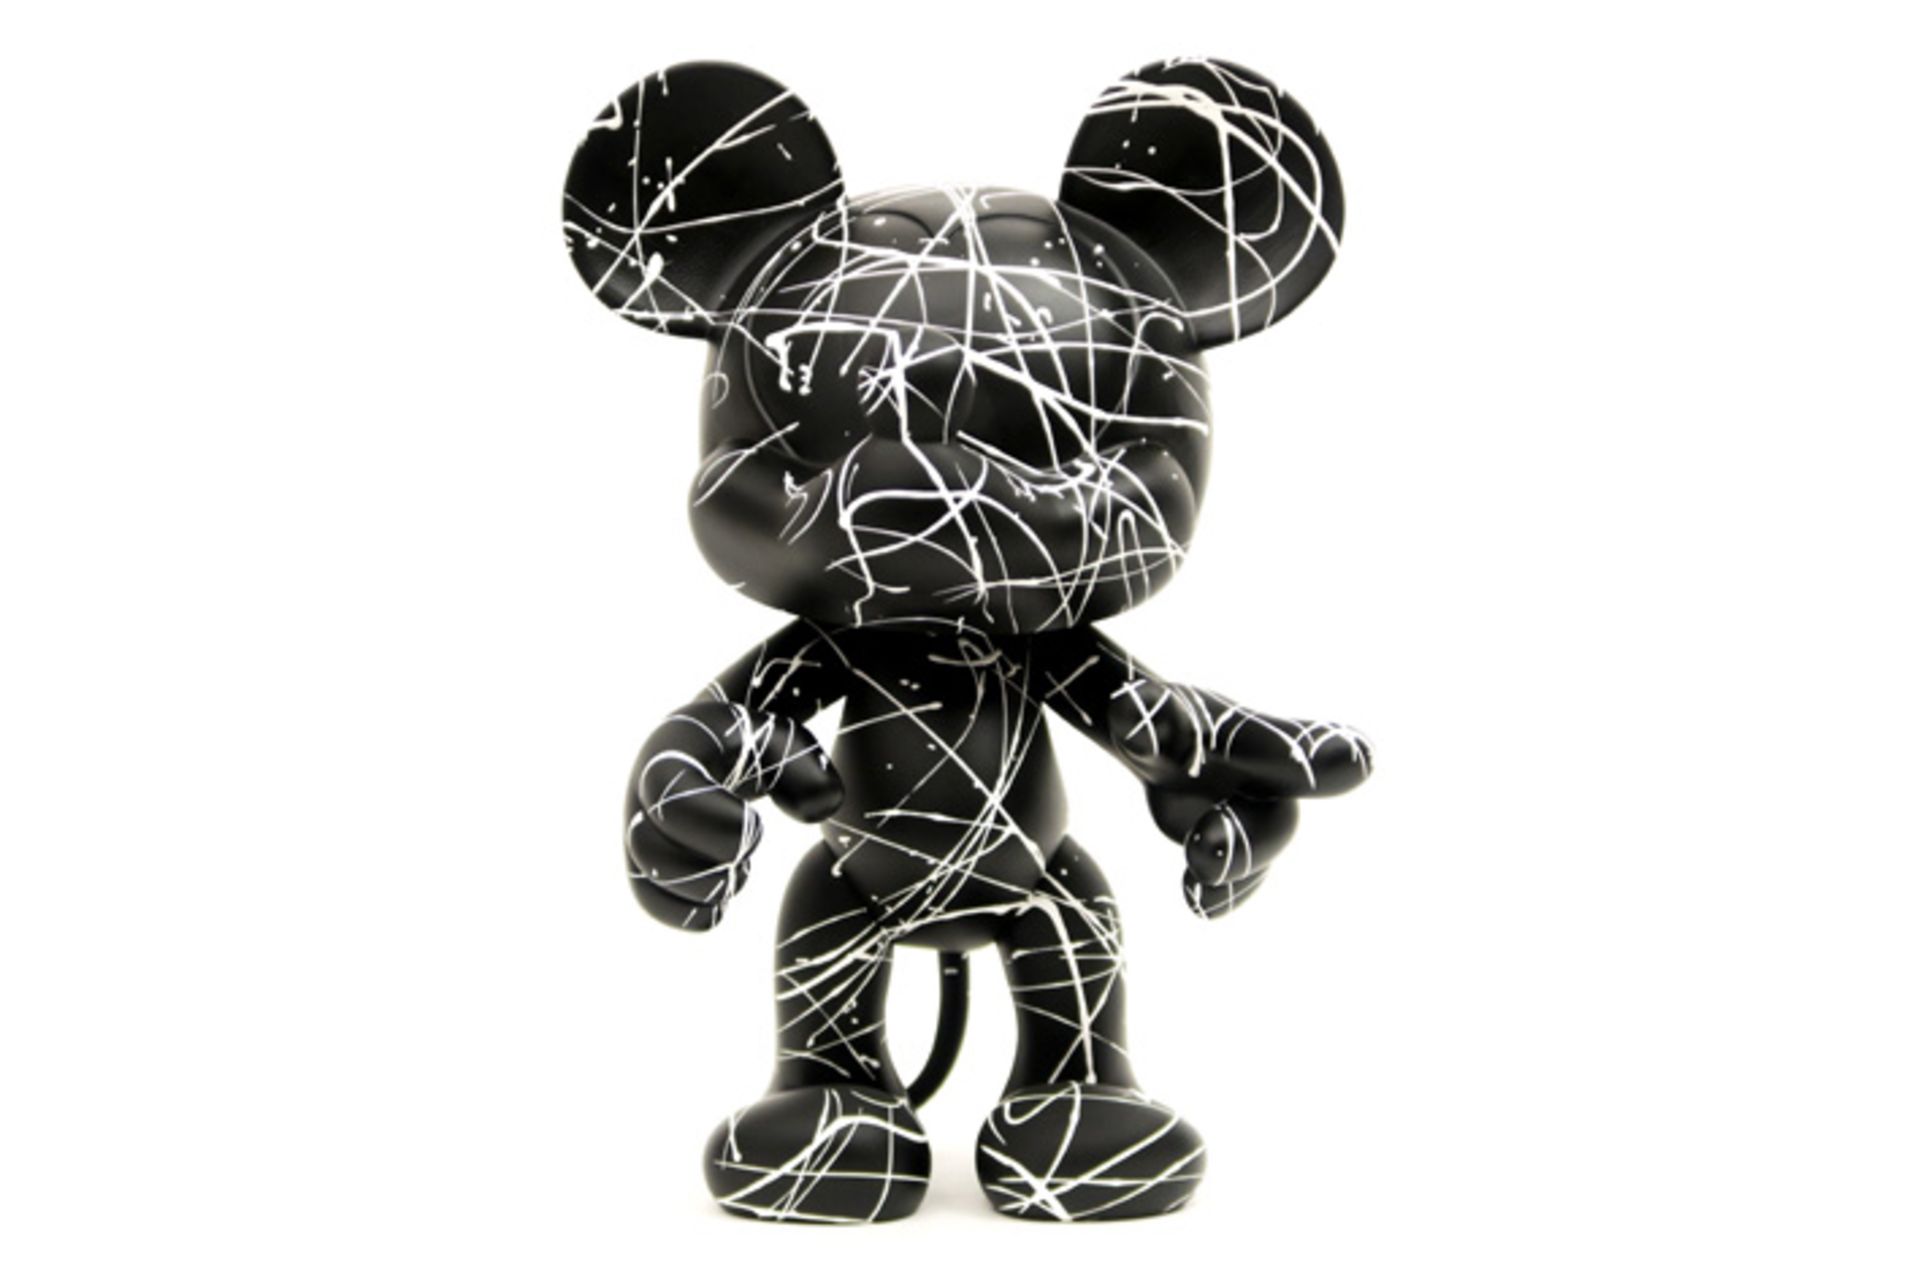 "Walt Disney Productions & Leblon & Delienne Pop Sculpture" "street art" version of Micky Mouse